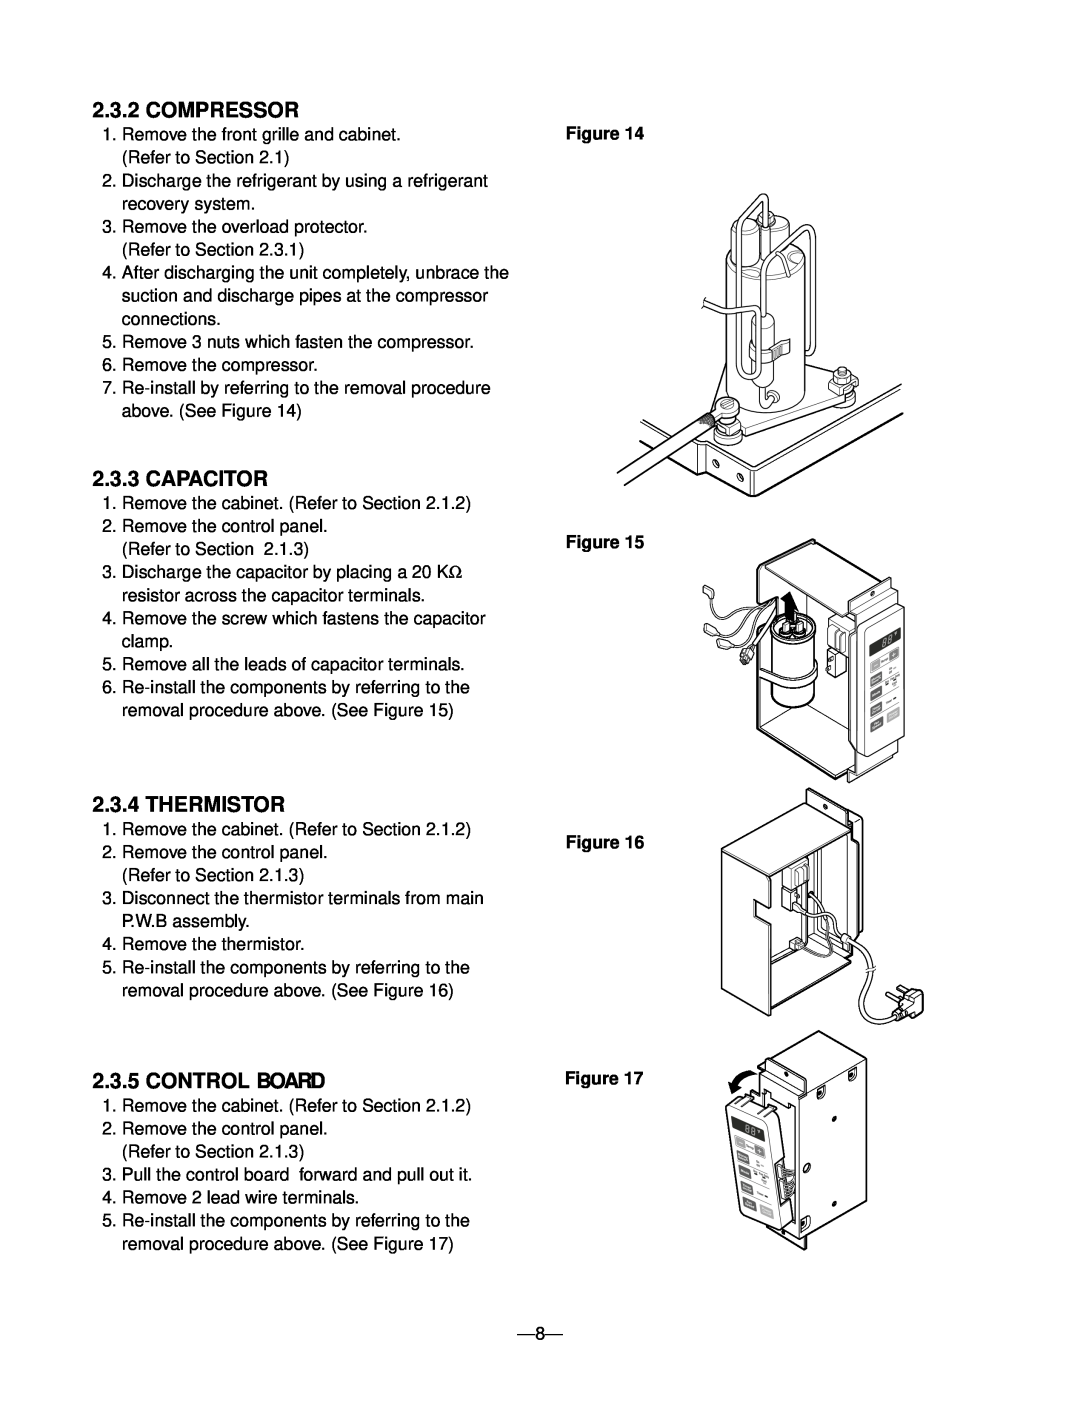 Friedrich CP05C10 manual Compressor, Capacitor, Thermistor, Control Board, Figure Figure 